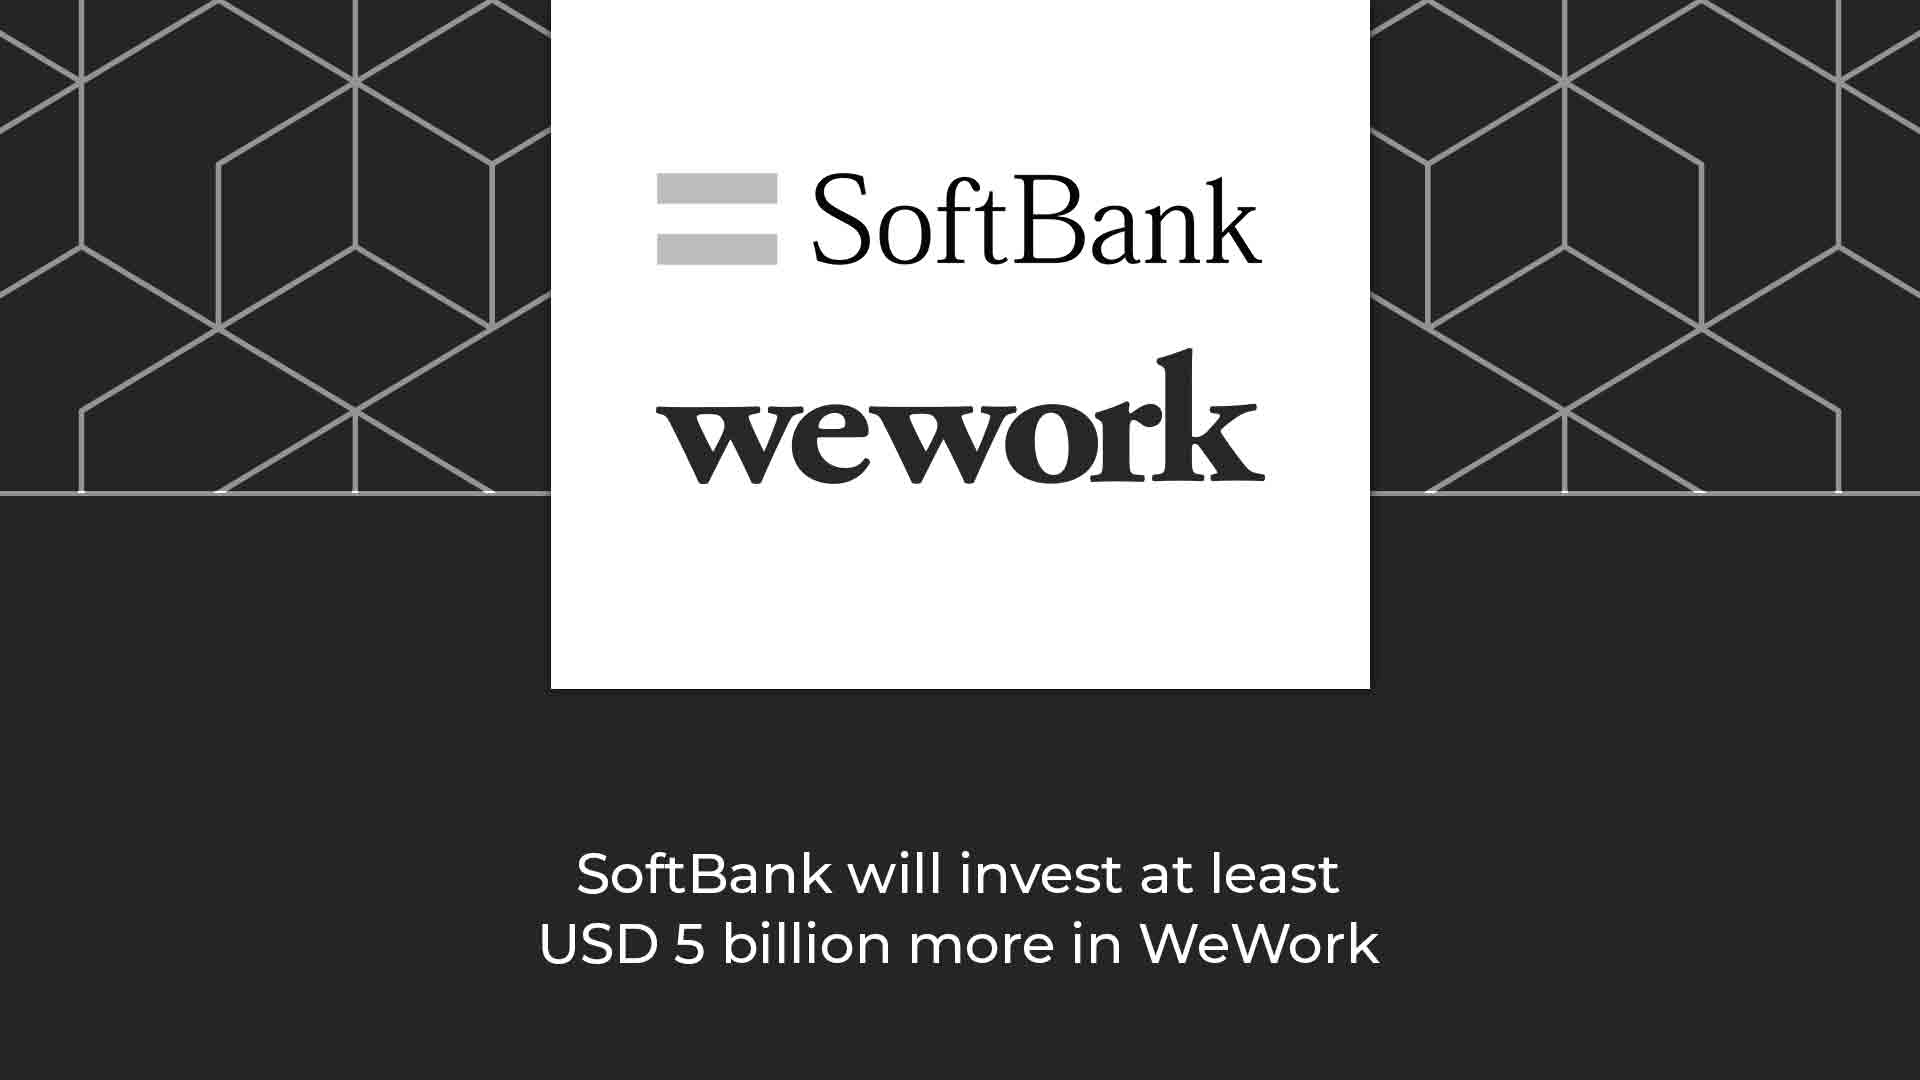 Sofbank wework